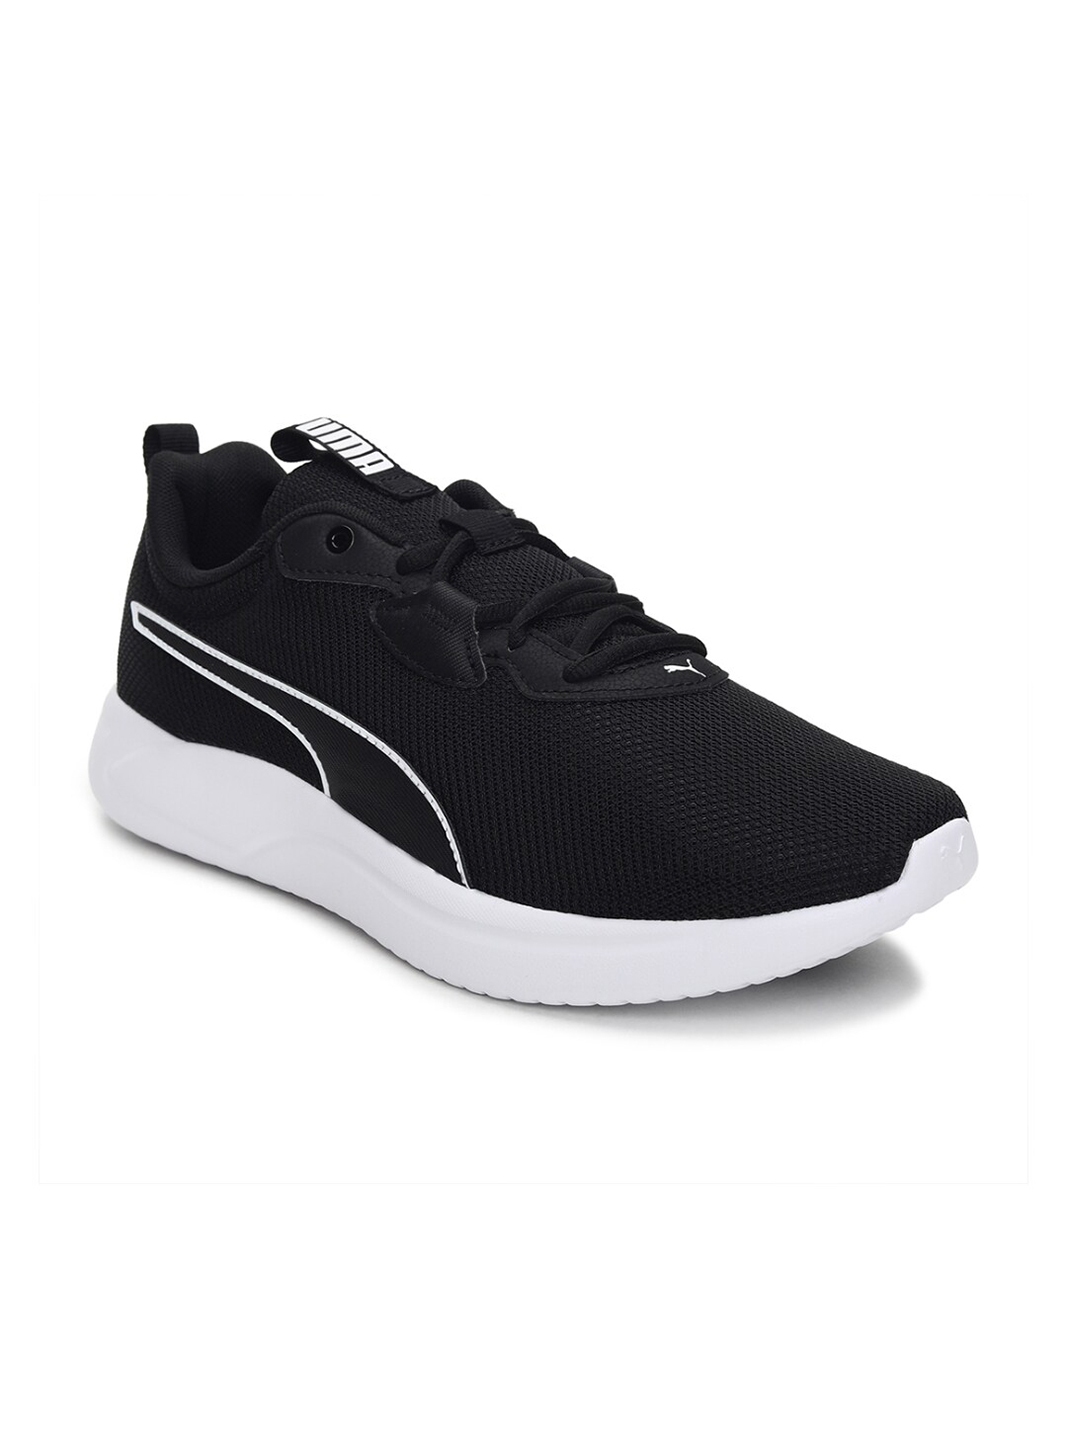 Buy Puma Men Black Mesh Running Shoes - Sports Shoes for Men 15312404 ...